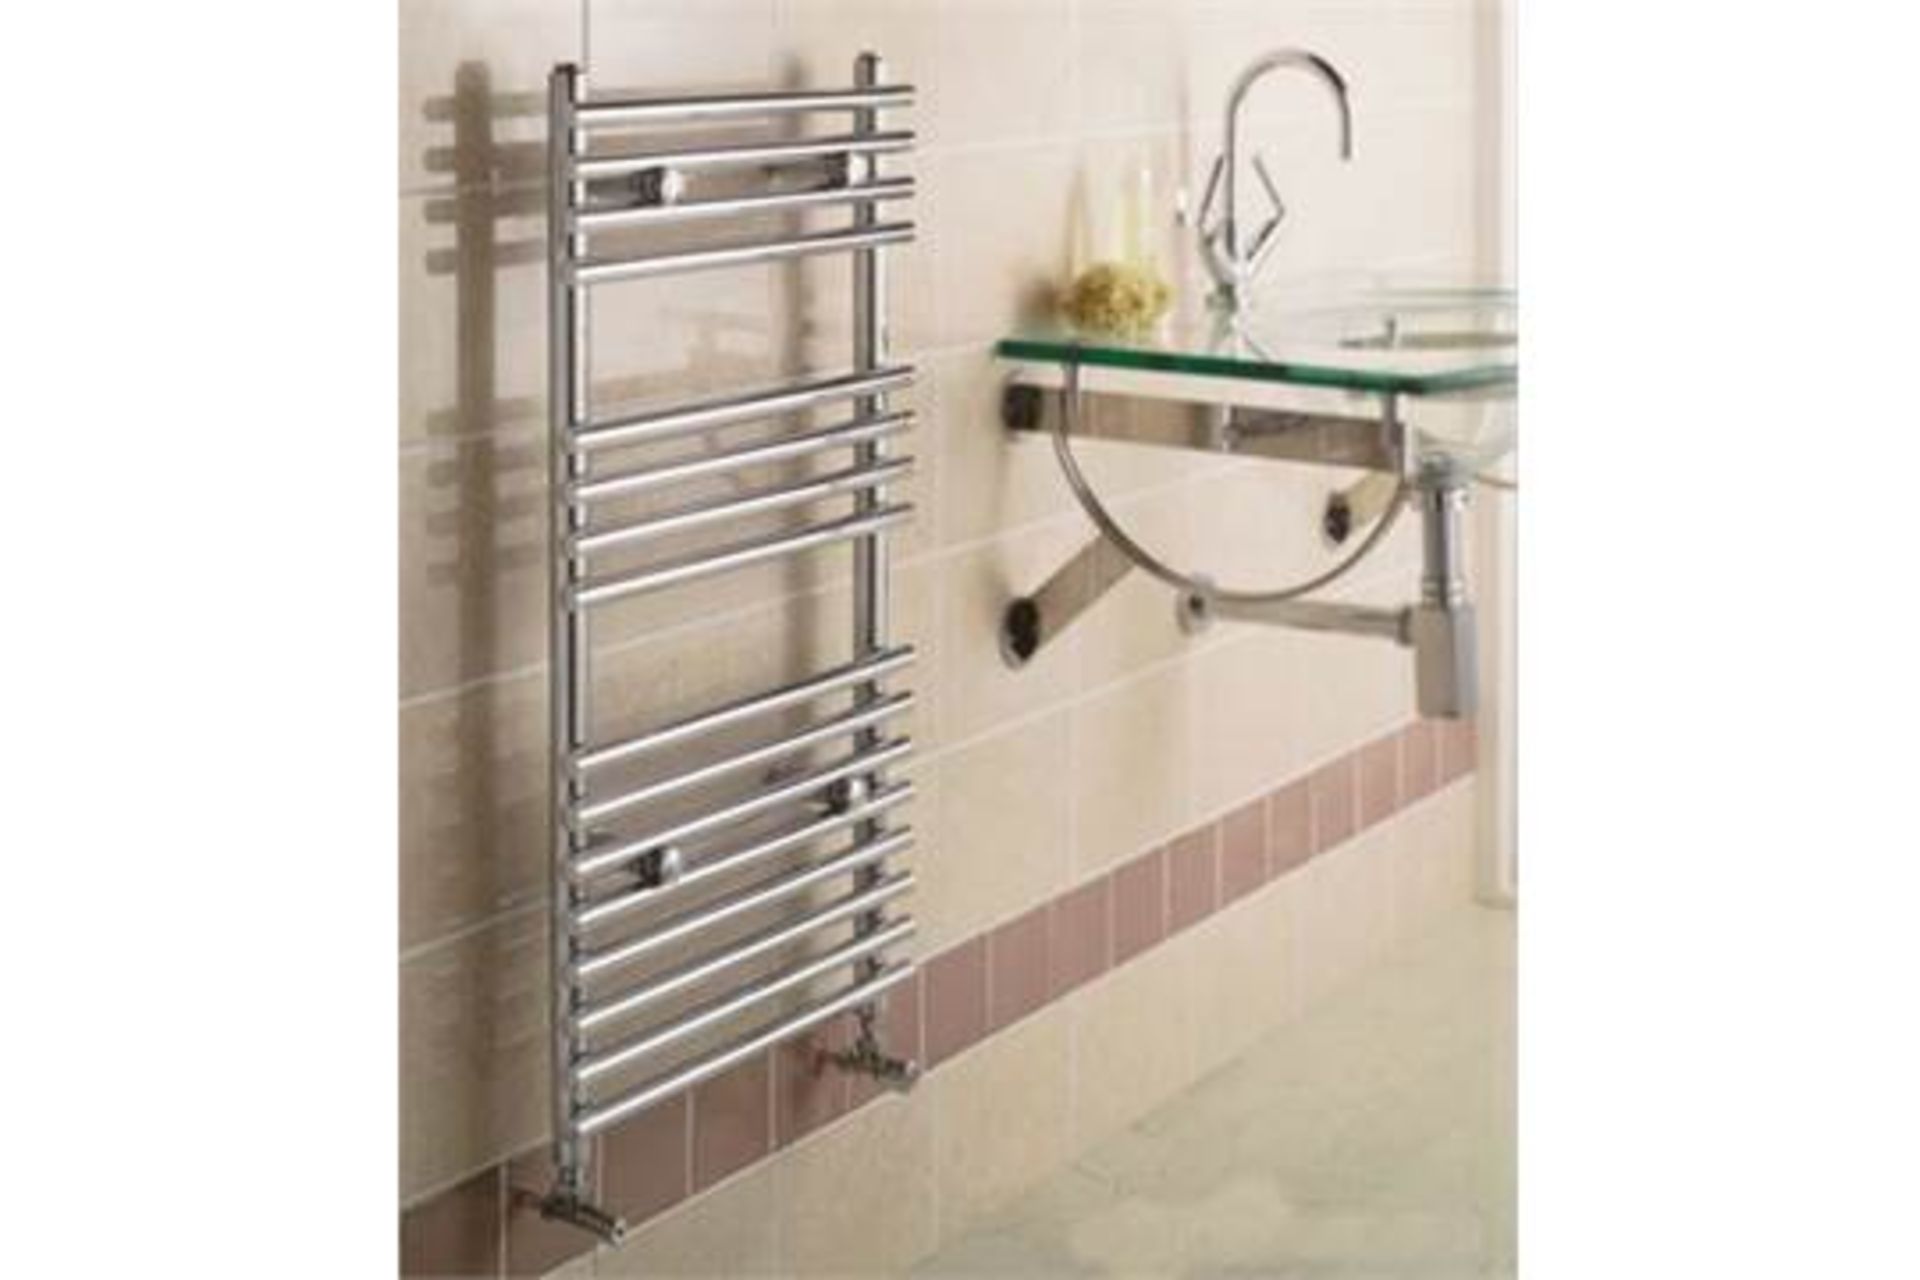 1 x Quinn Topaz Bathroom Ladder Towel Rail - Modern Tube Design With Chrome Finish - Size Height - Image 3 of 3